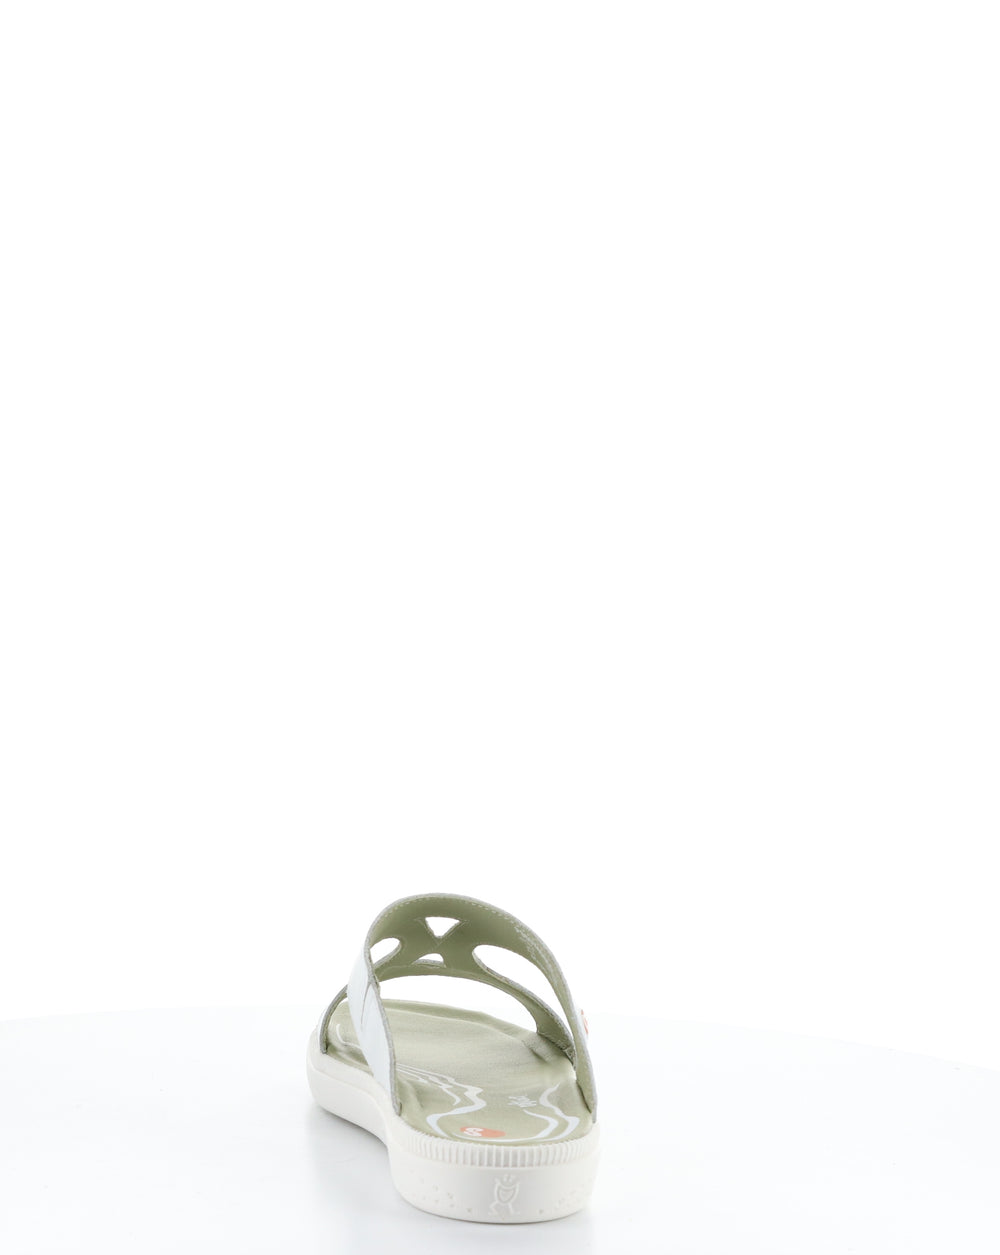 INBEY745SOF 000 WHITE Velcro Sandals